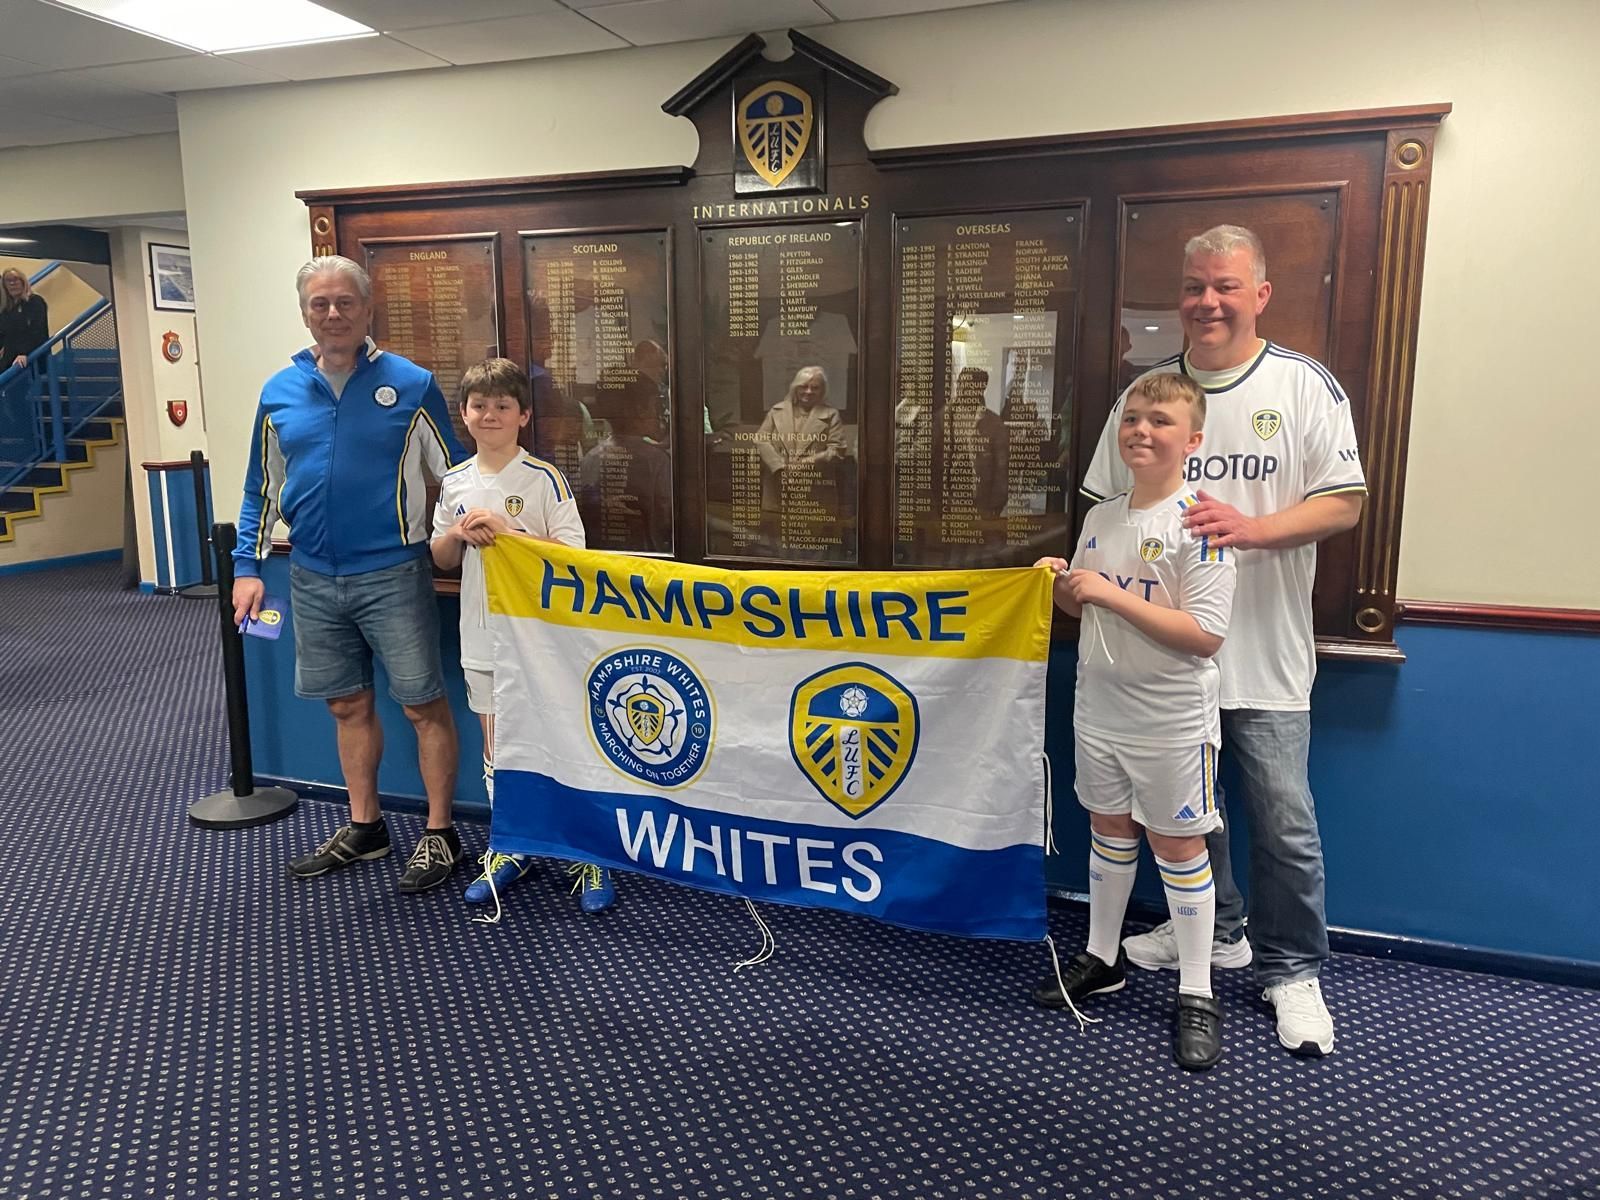 Sebastian and Daniel holding the Hampshire Whites flag alongside their proud parents